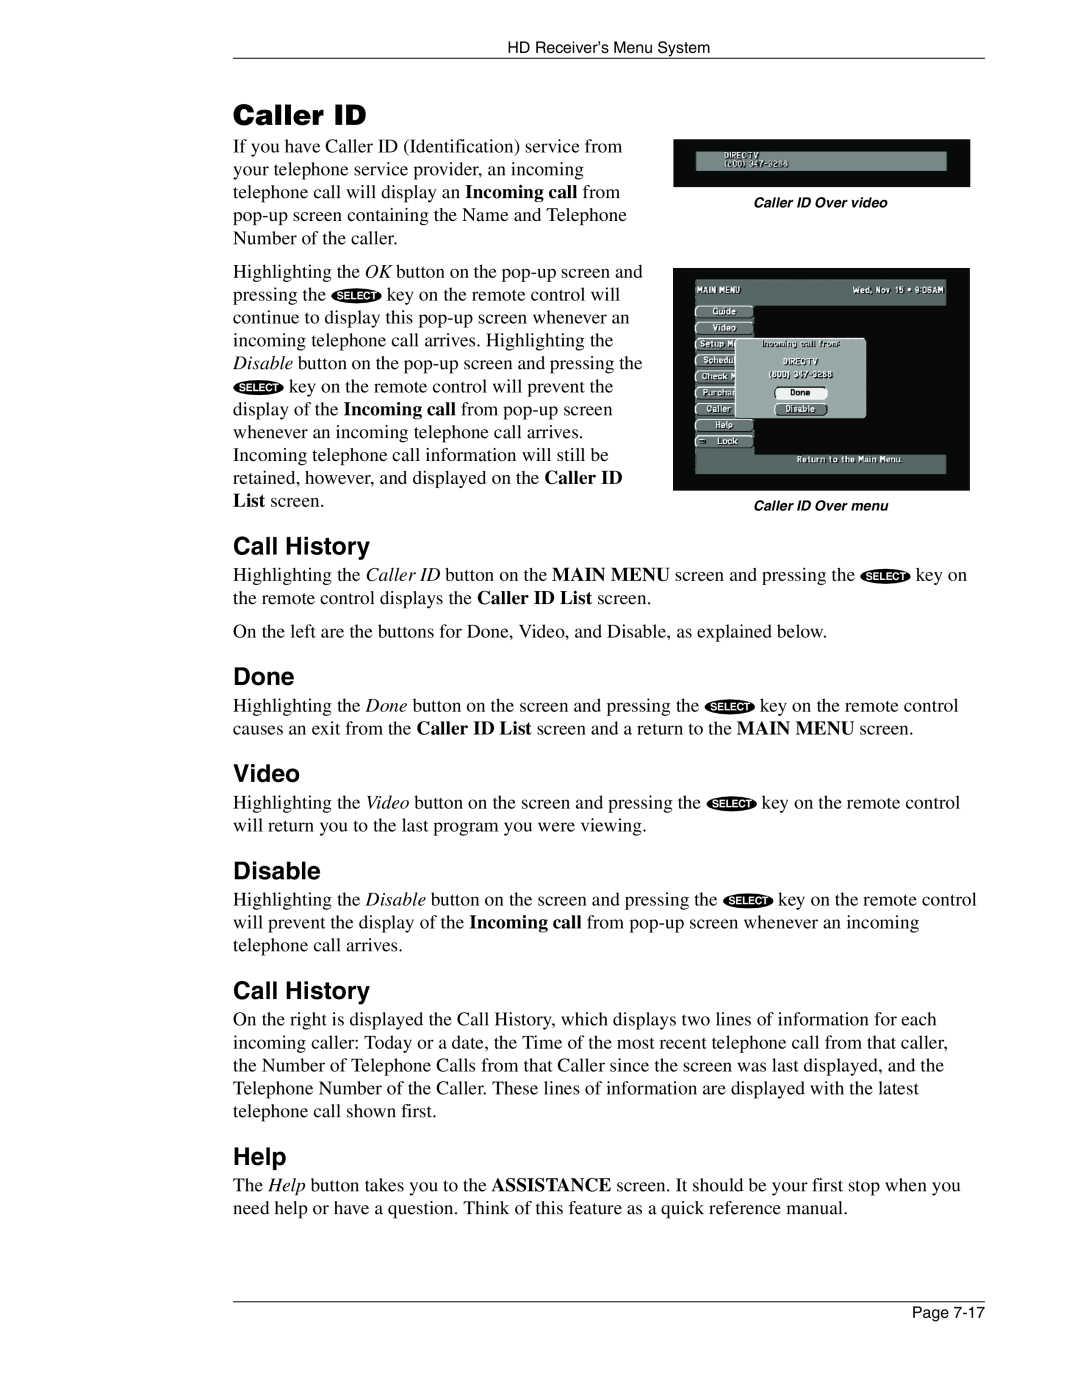 DirecTV HIRD-E86 manual Caller ID, Call History, Disable, Help, Done, Video 